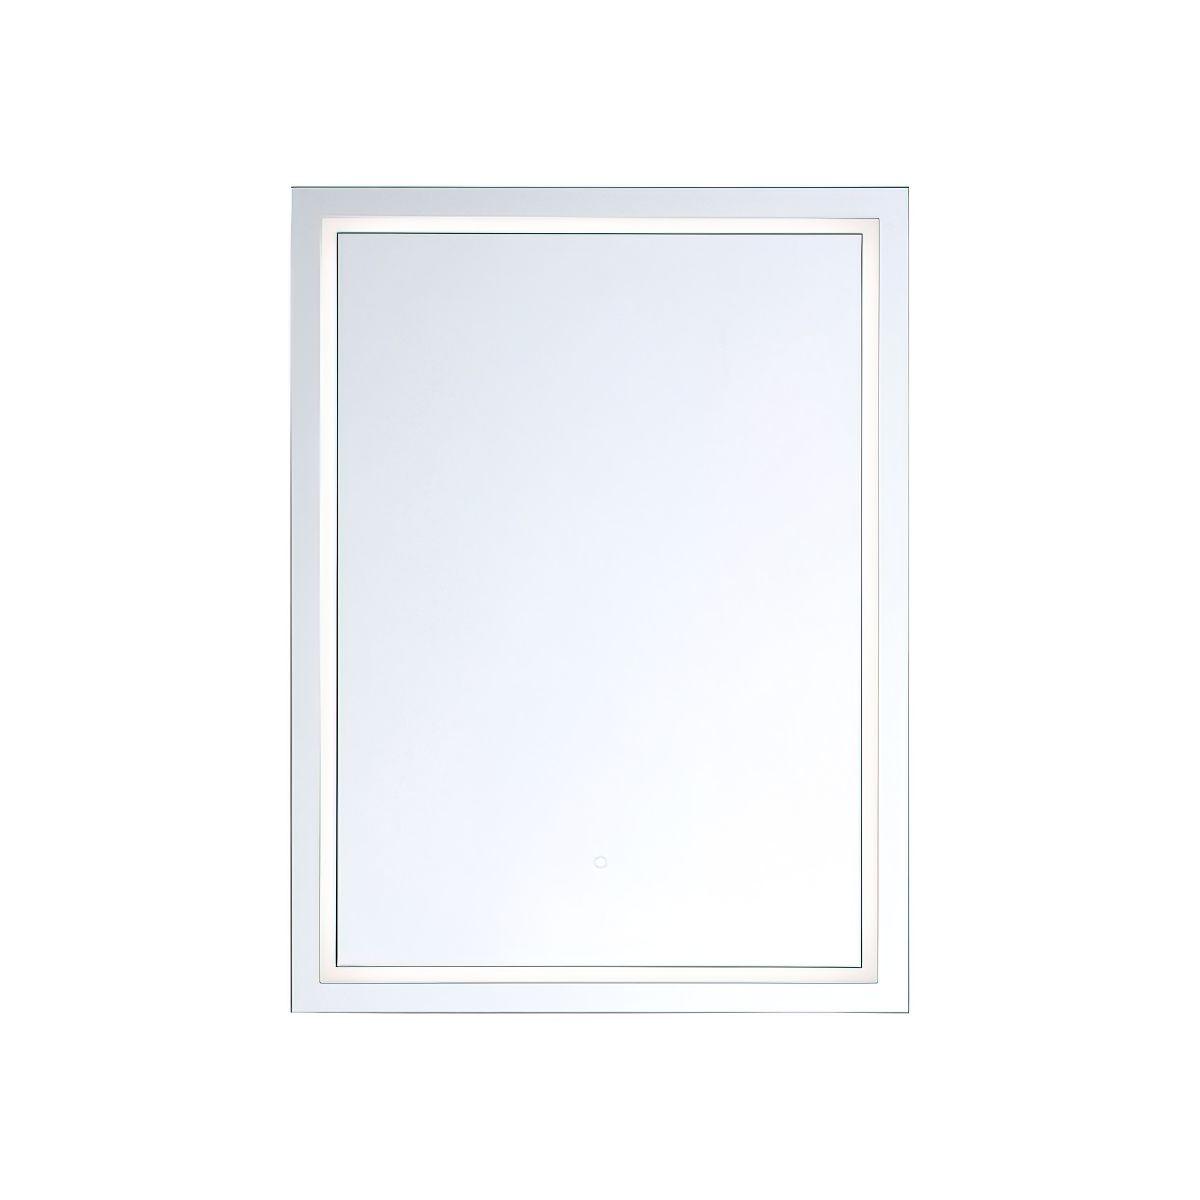 Eris 24 In x 32 In. White LED Wall Mirror